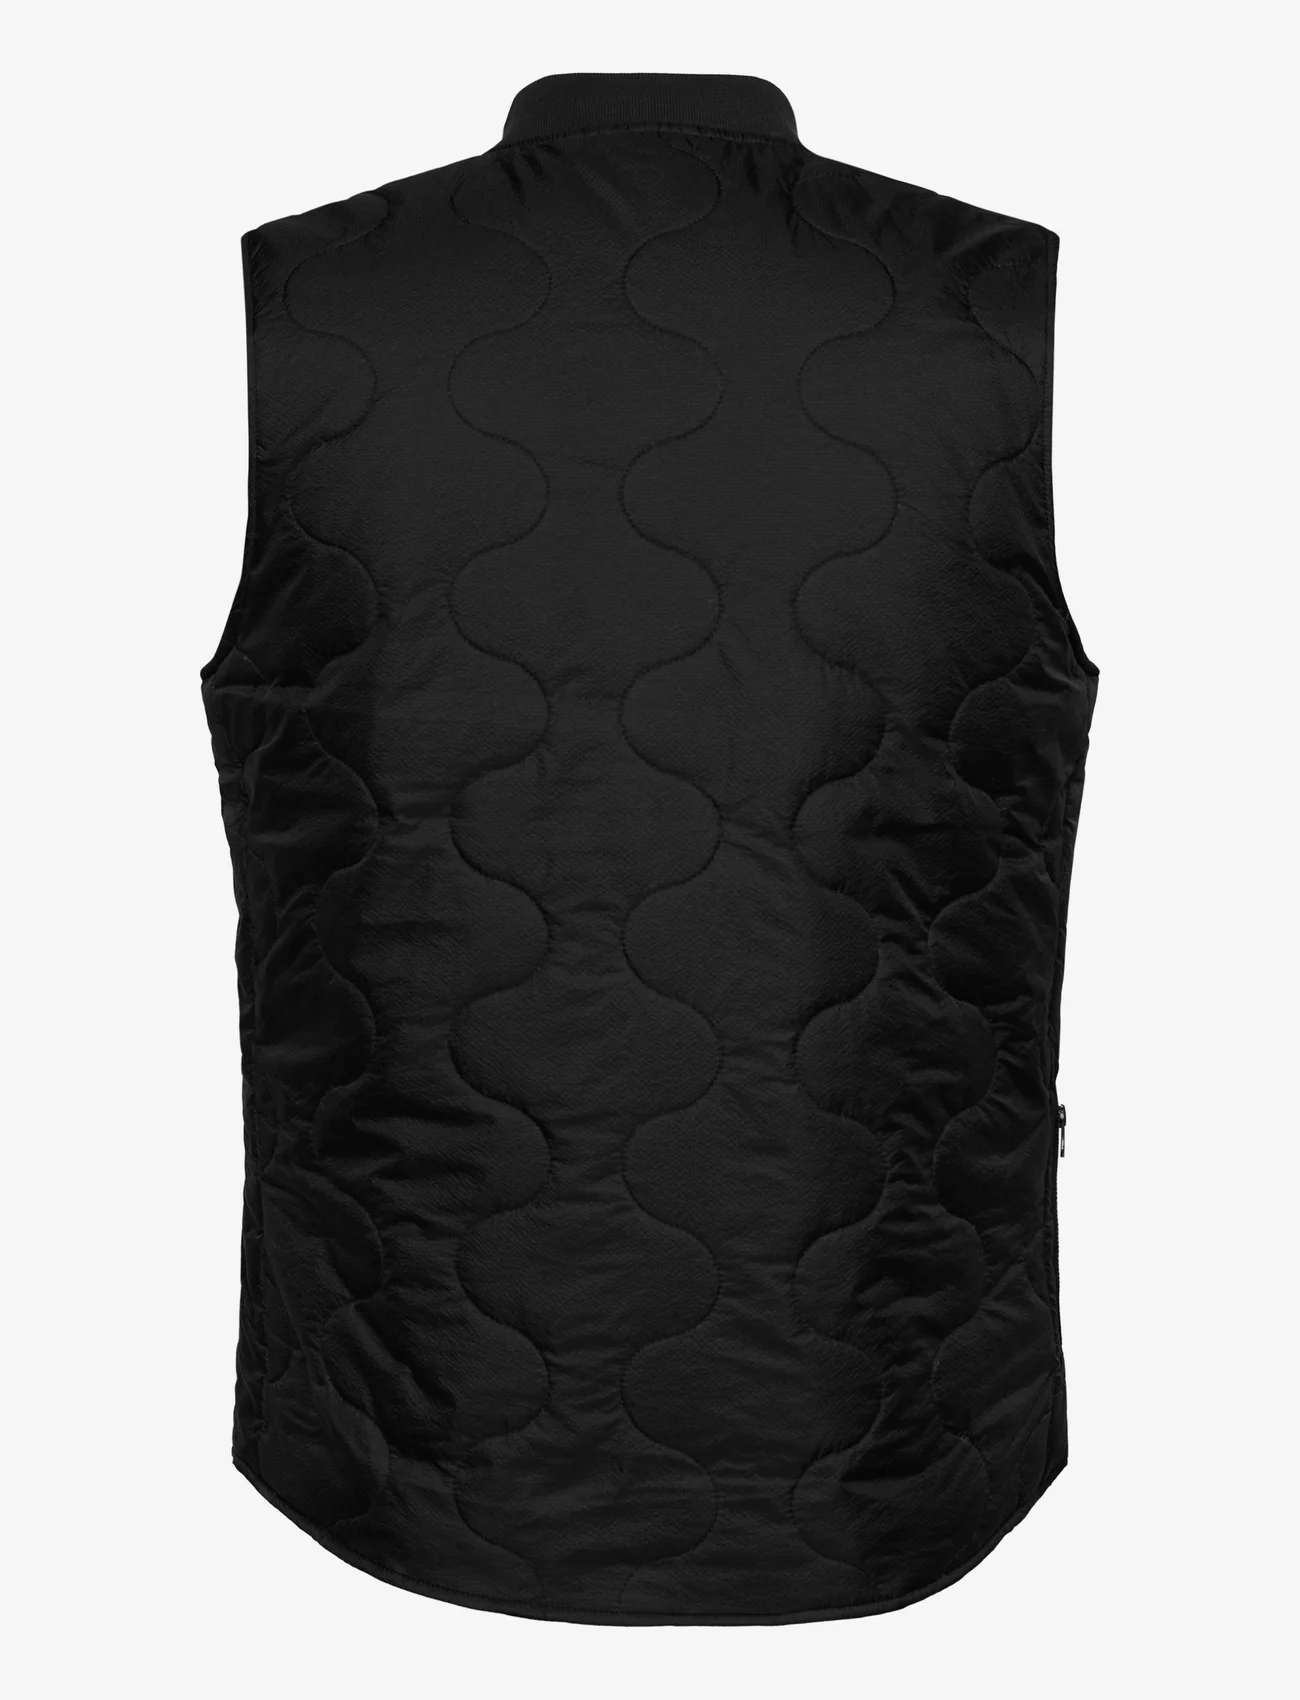 Taikan - Quilted Vest-Black - veste - black - 1